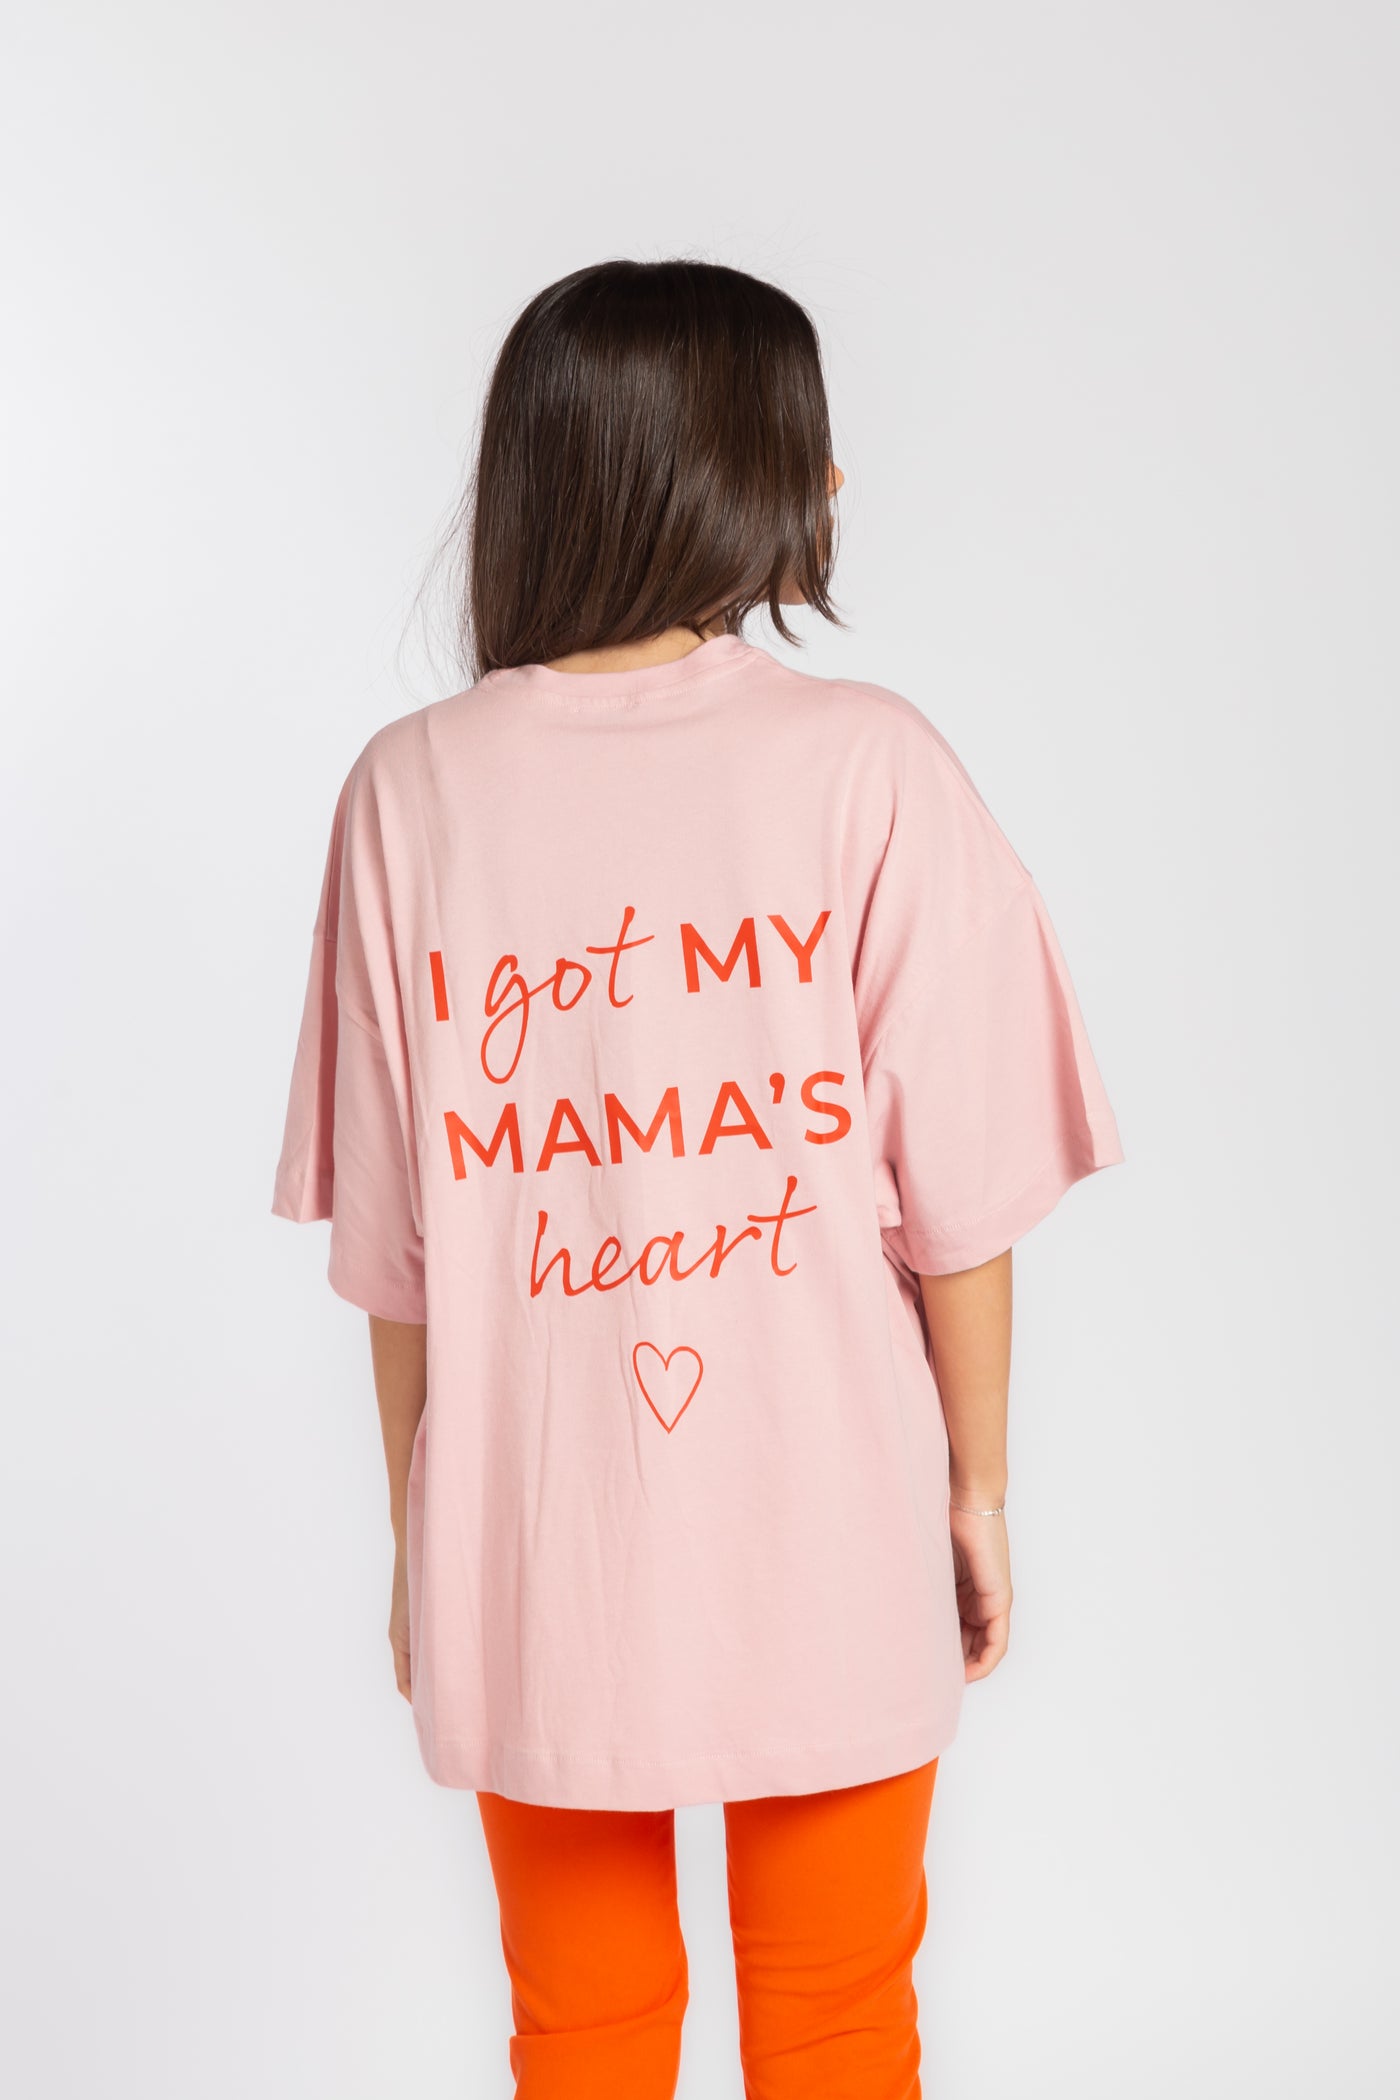 Mamas Heart Tshirt